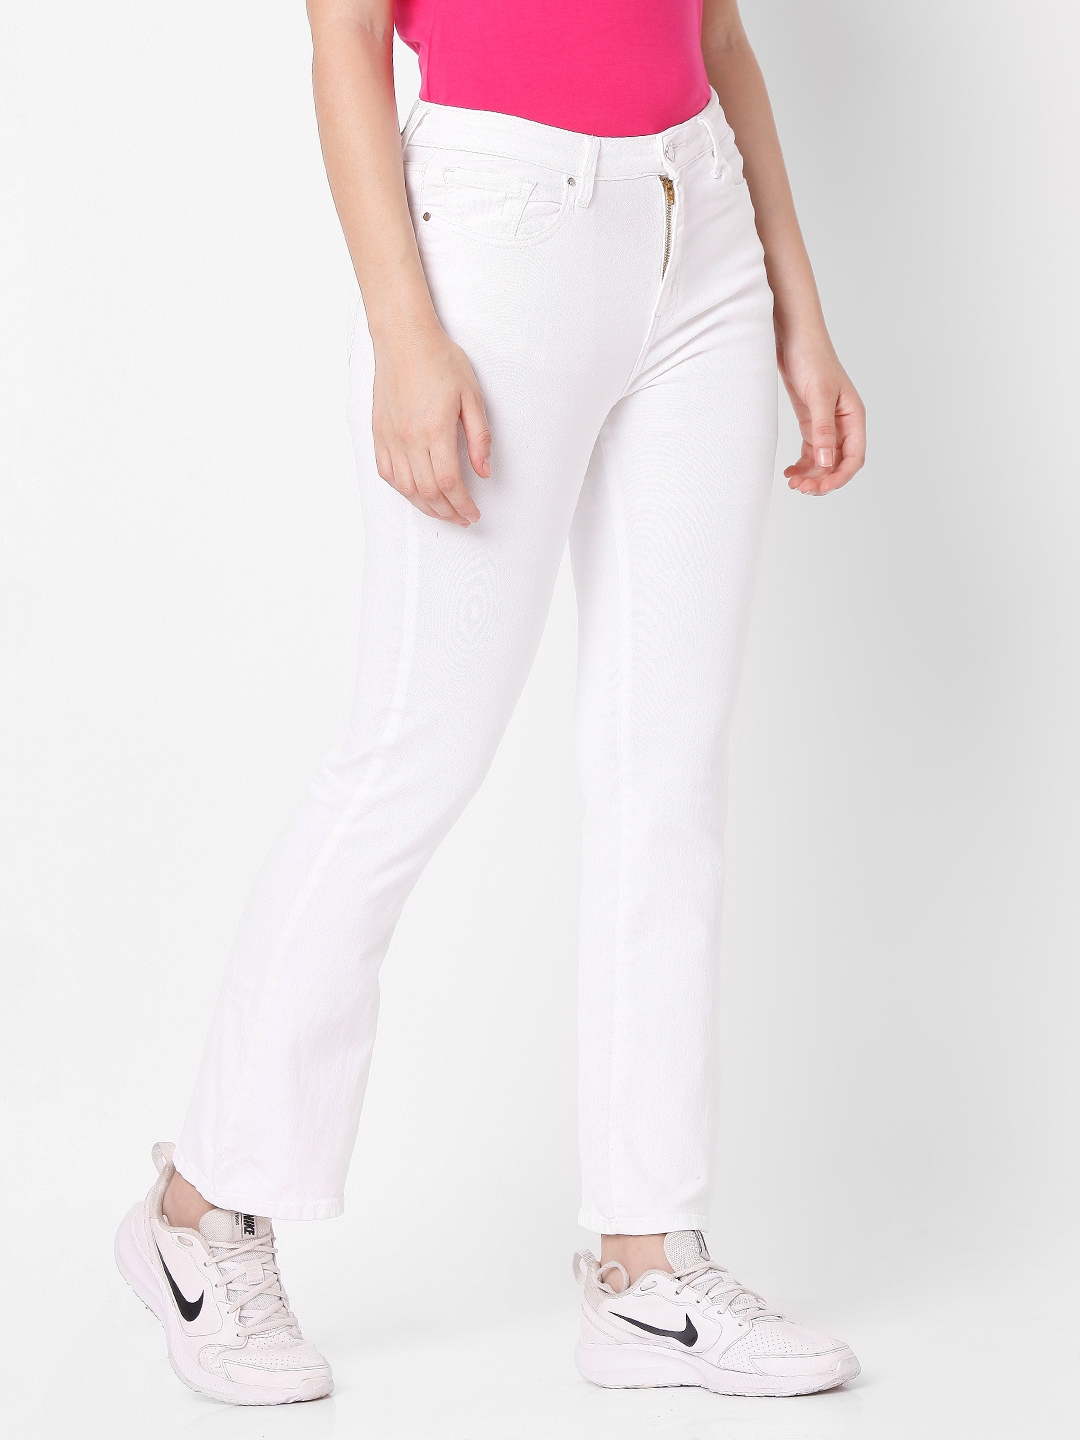 spykar | Women's White Cotton Solid Slim Jeans 2